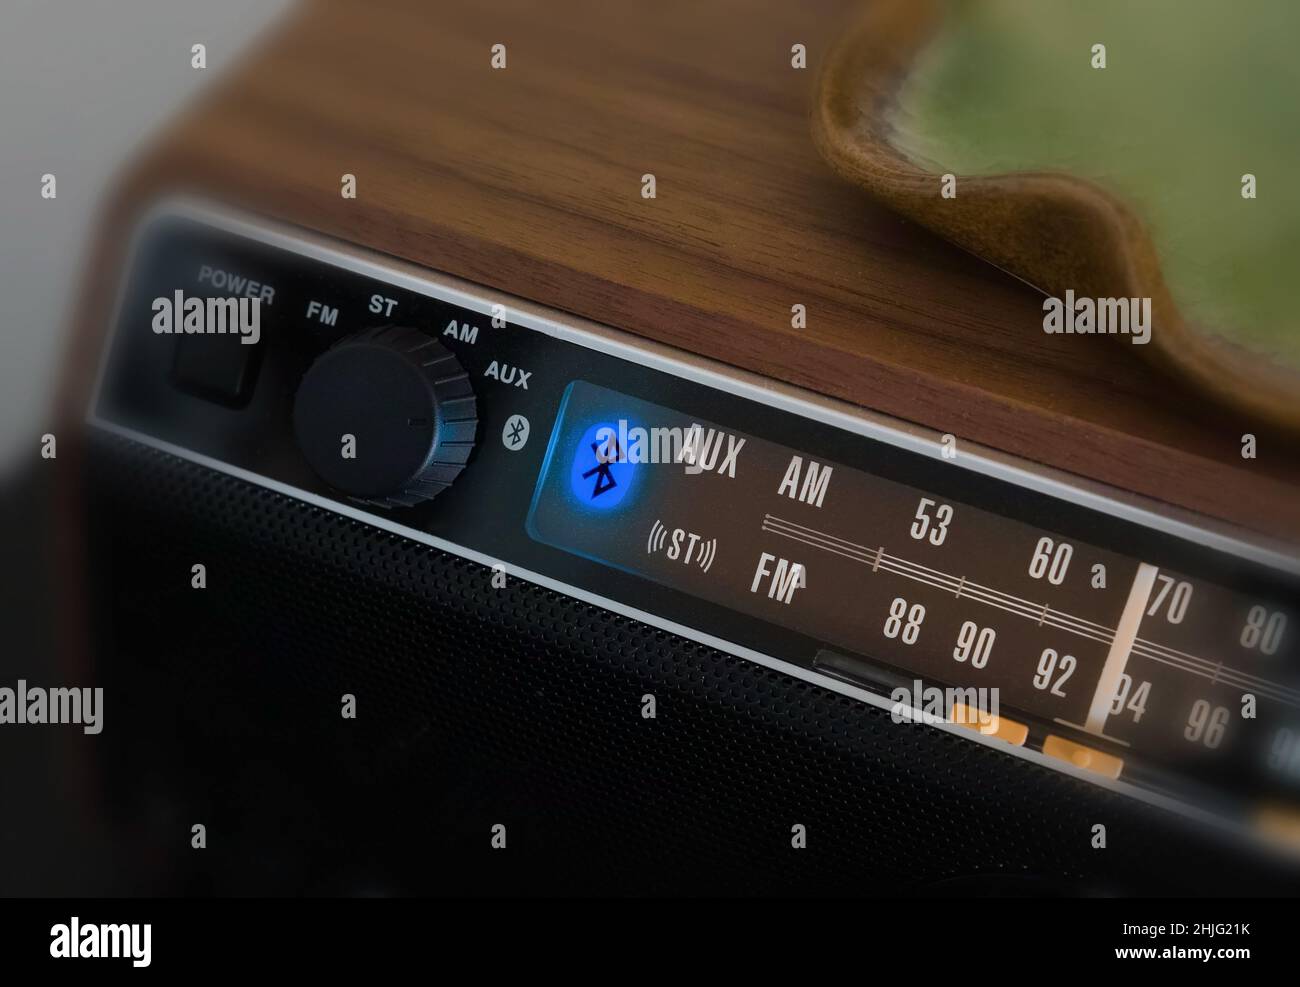 Slidebar radio that contains also Bluetooth capabilities. Stock Photo